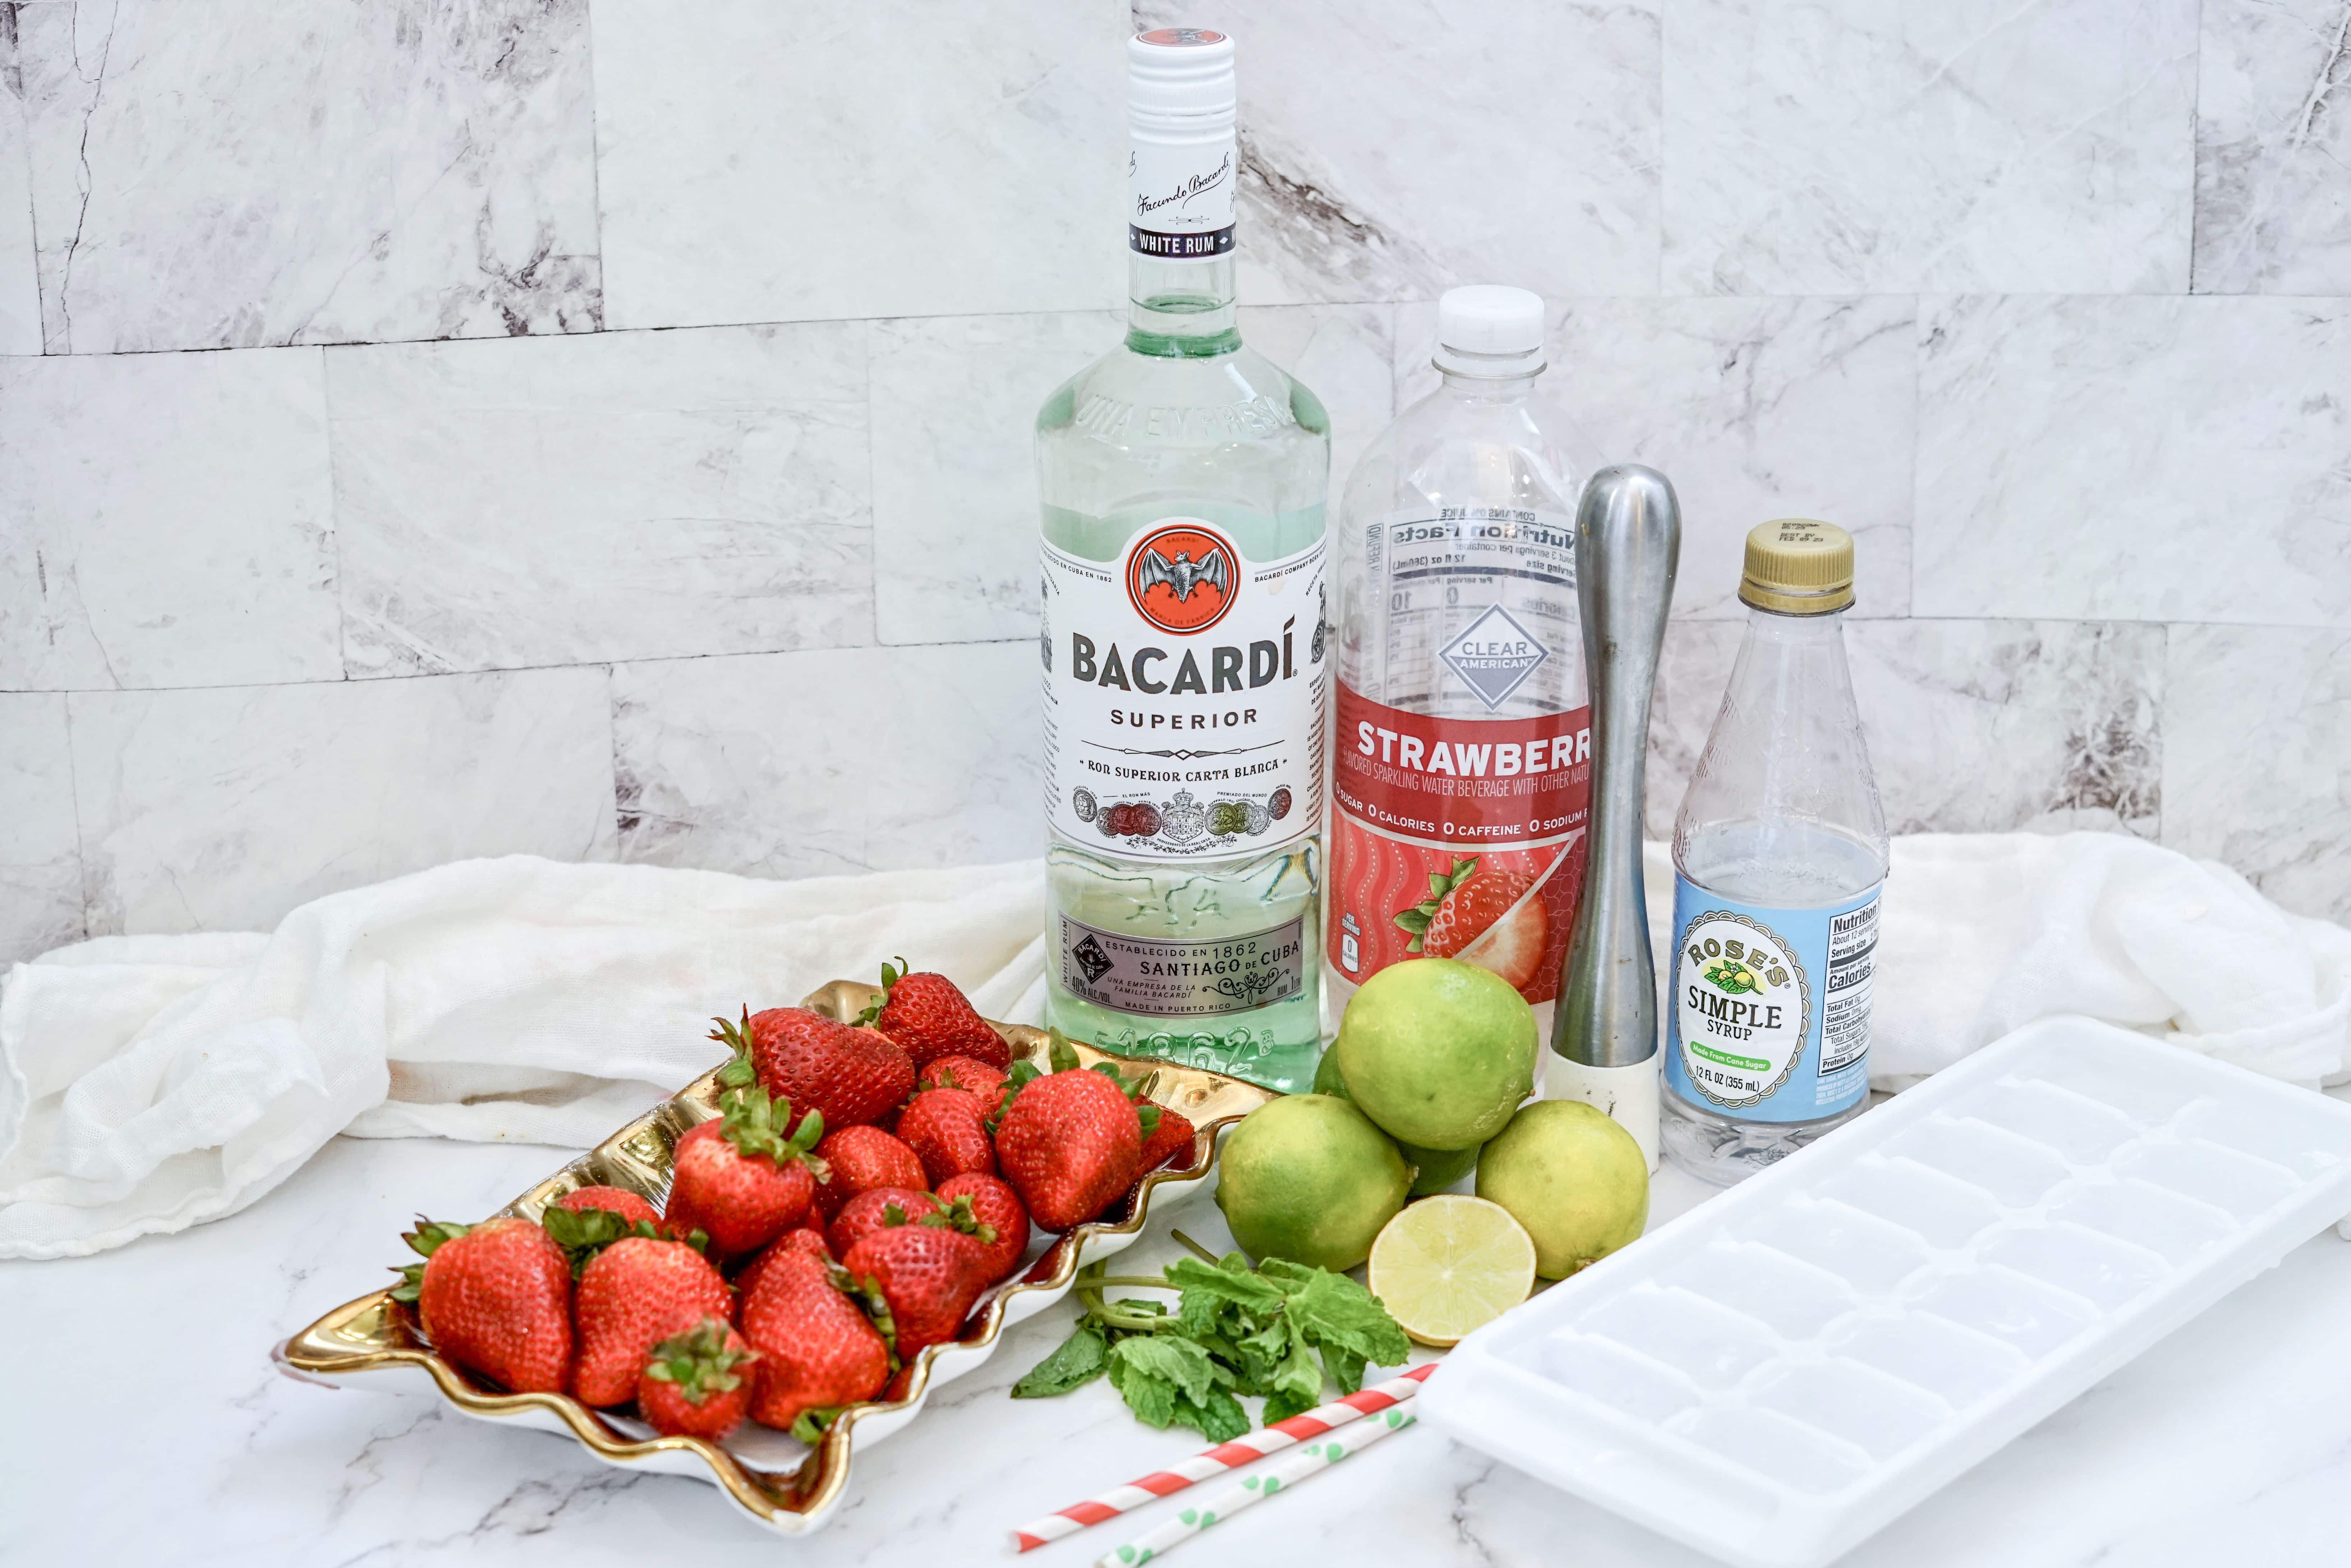 Strawberry Mojito {Easy and Refreshing!} –